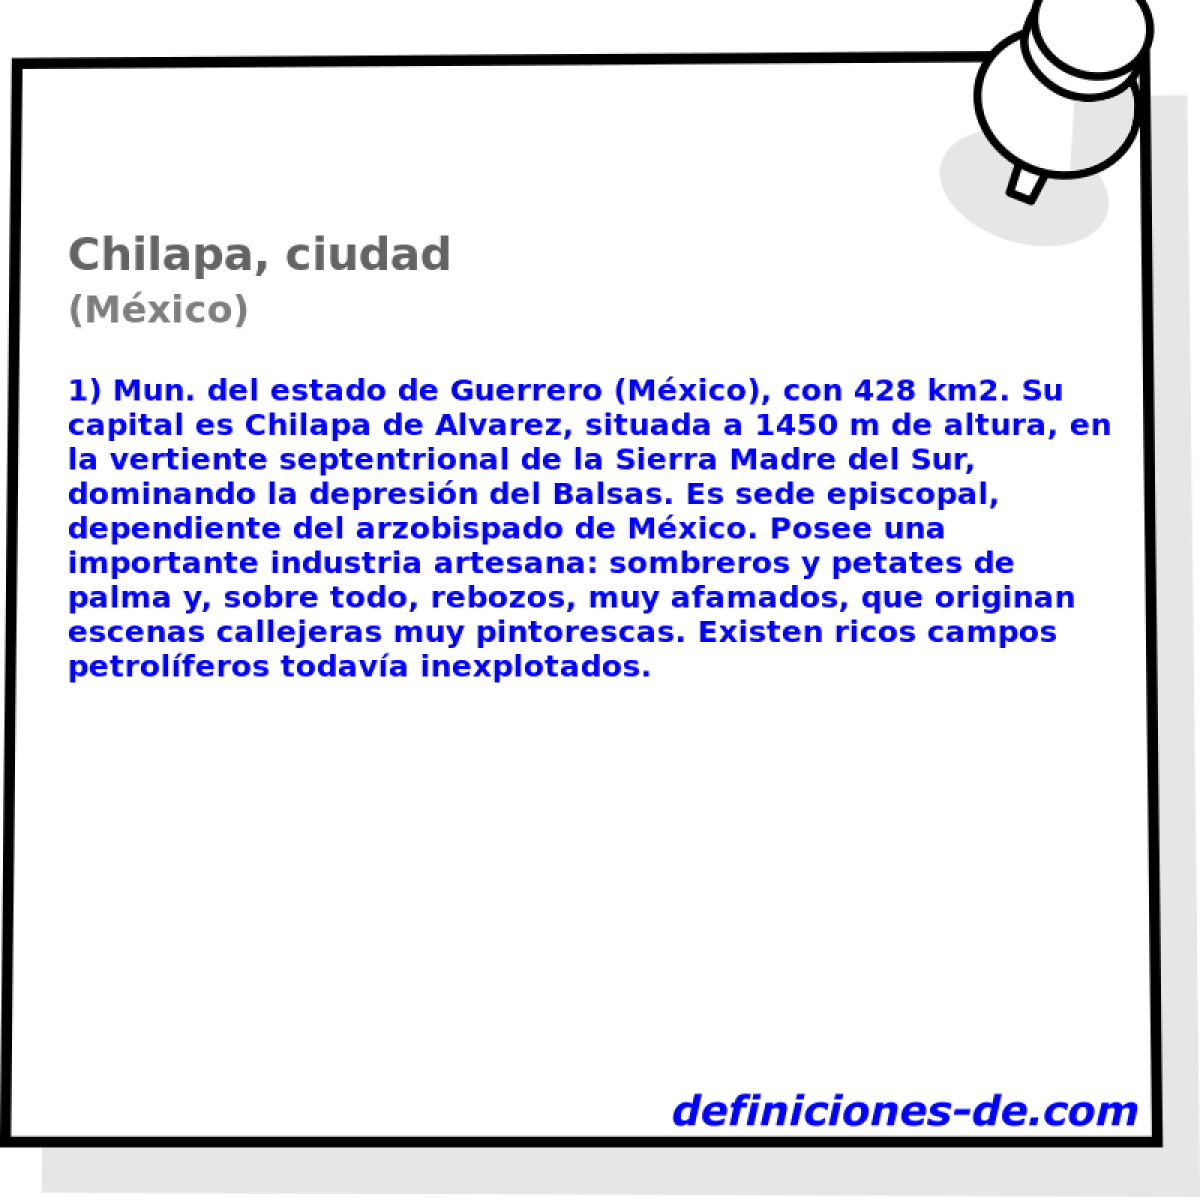 Chilapa, ciudad (Mxico)